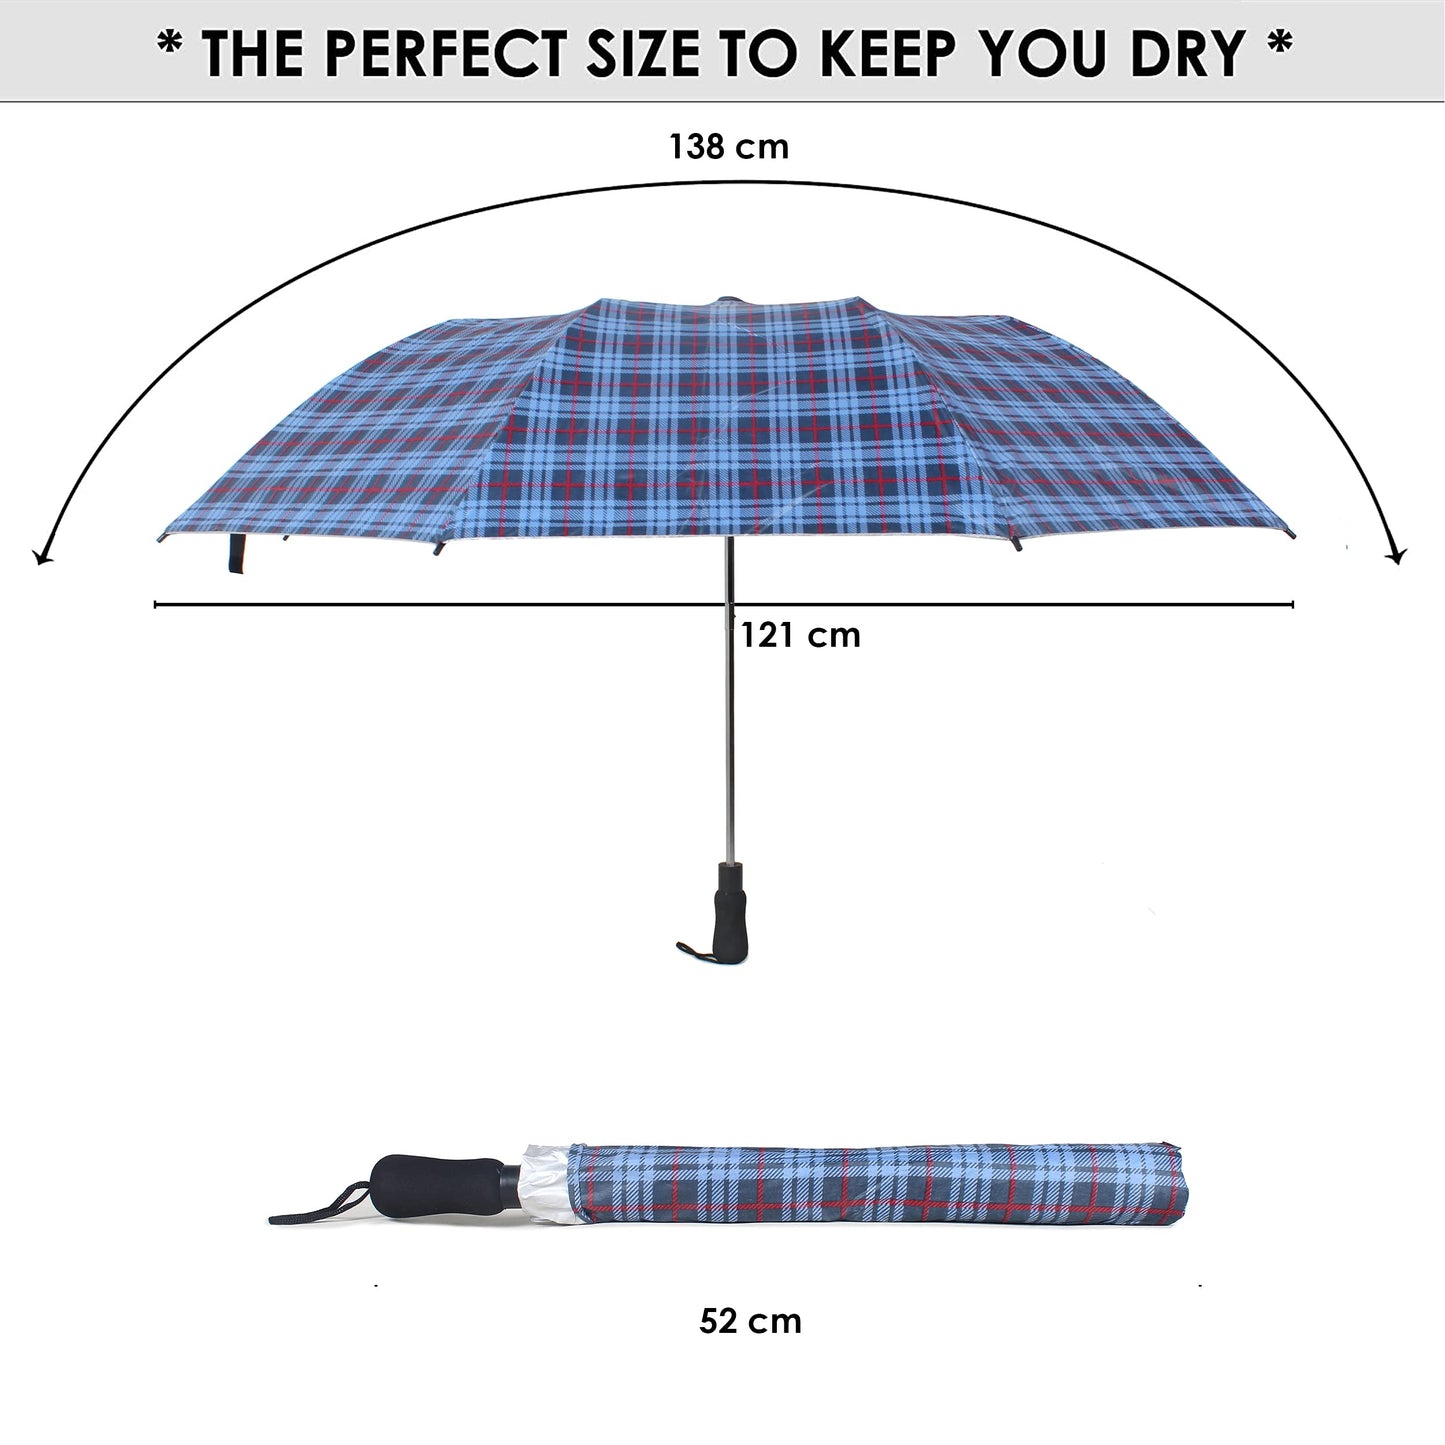 THE CLOWNFISH Umbrella 2 Fold Auto Open Waterproof Pongee Umbrellas For Men and Women (Checks Design- Light Blue)